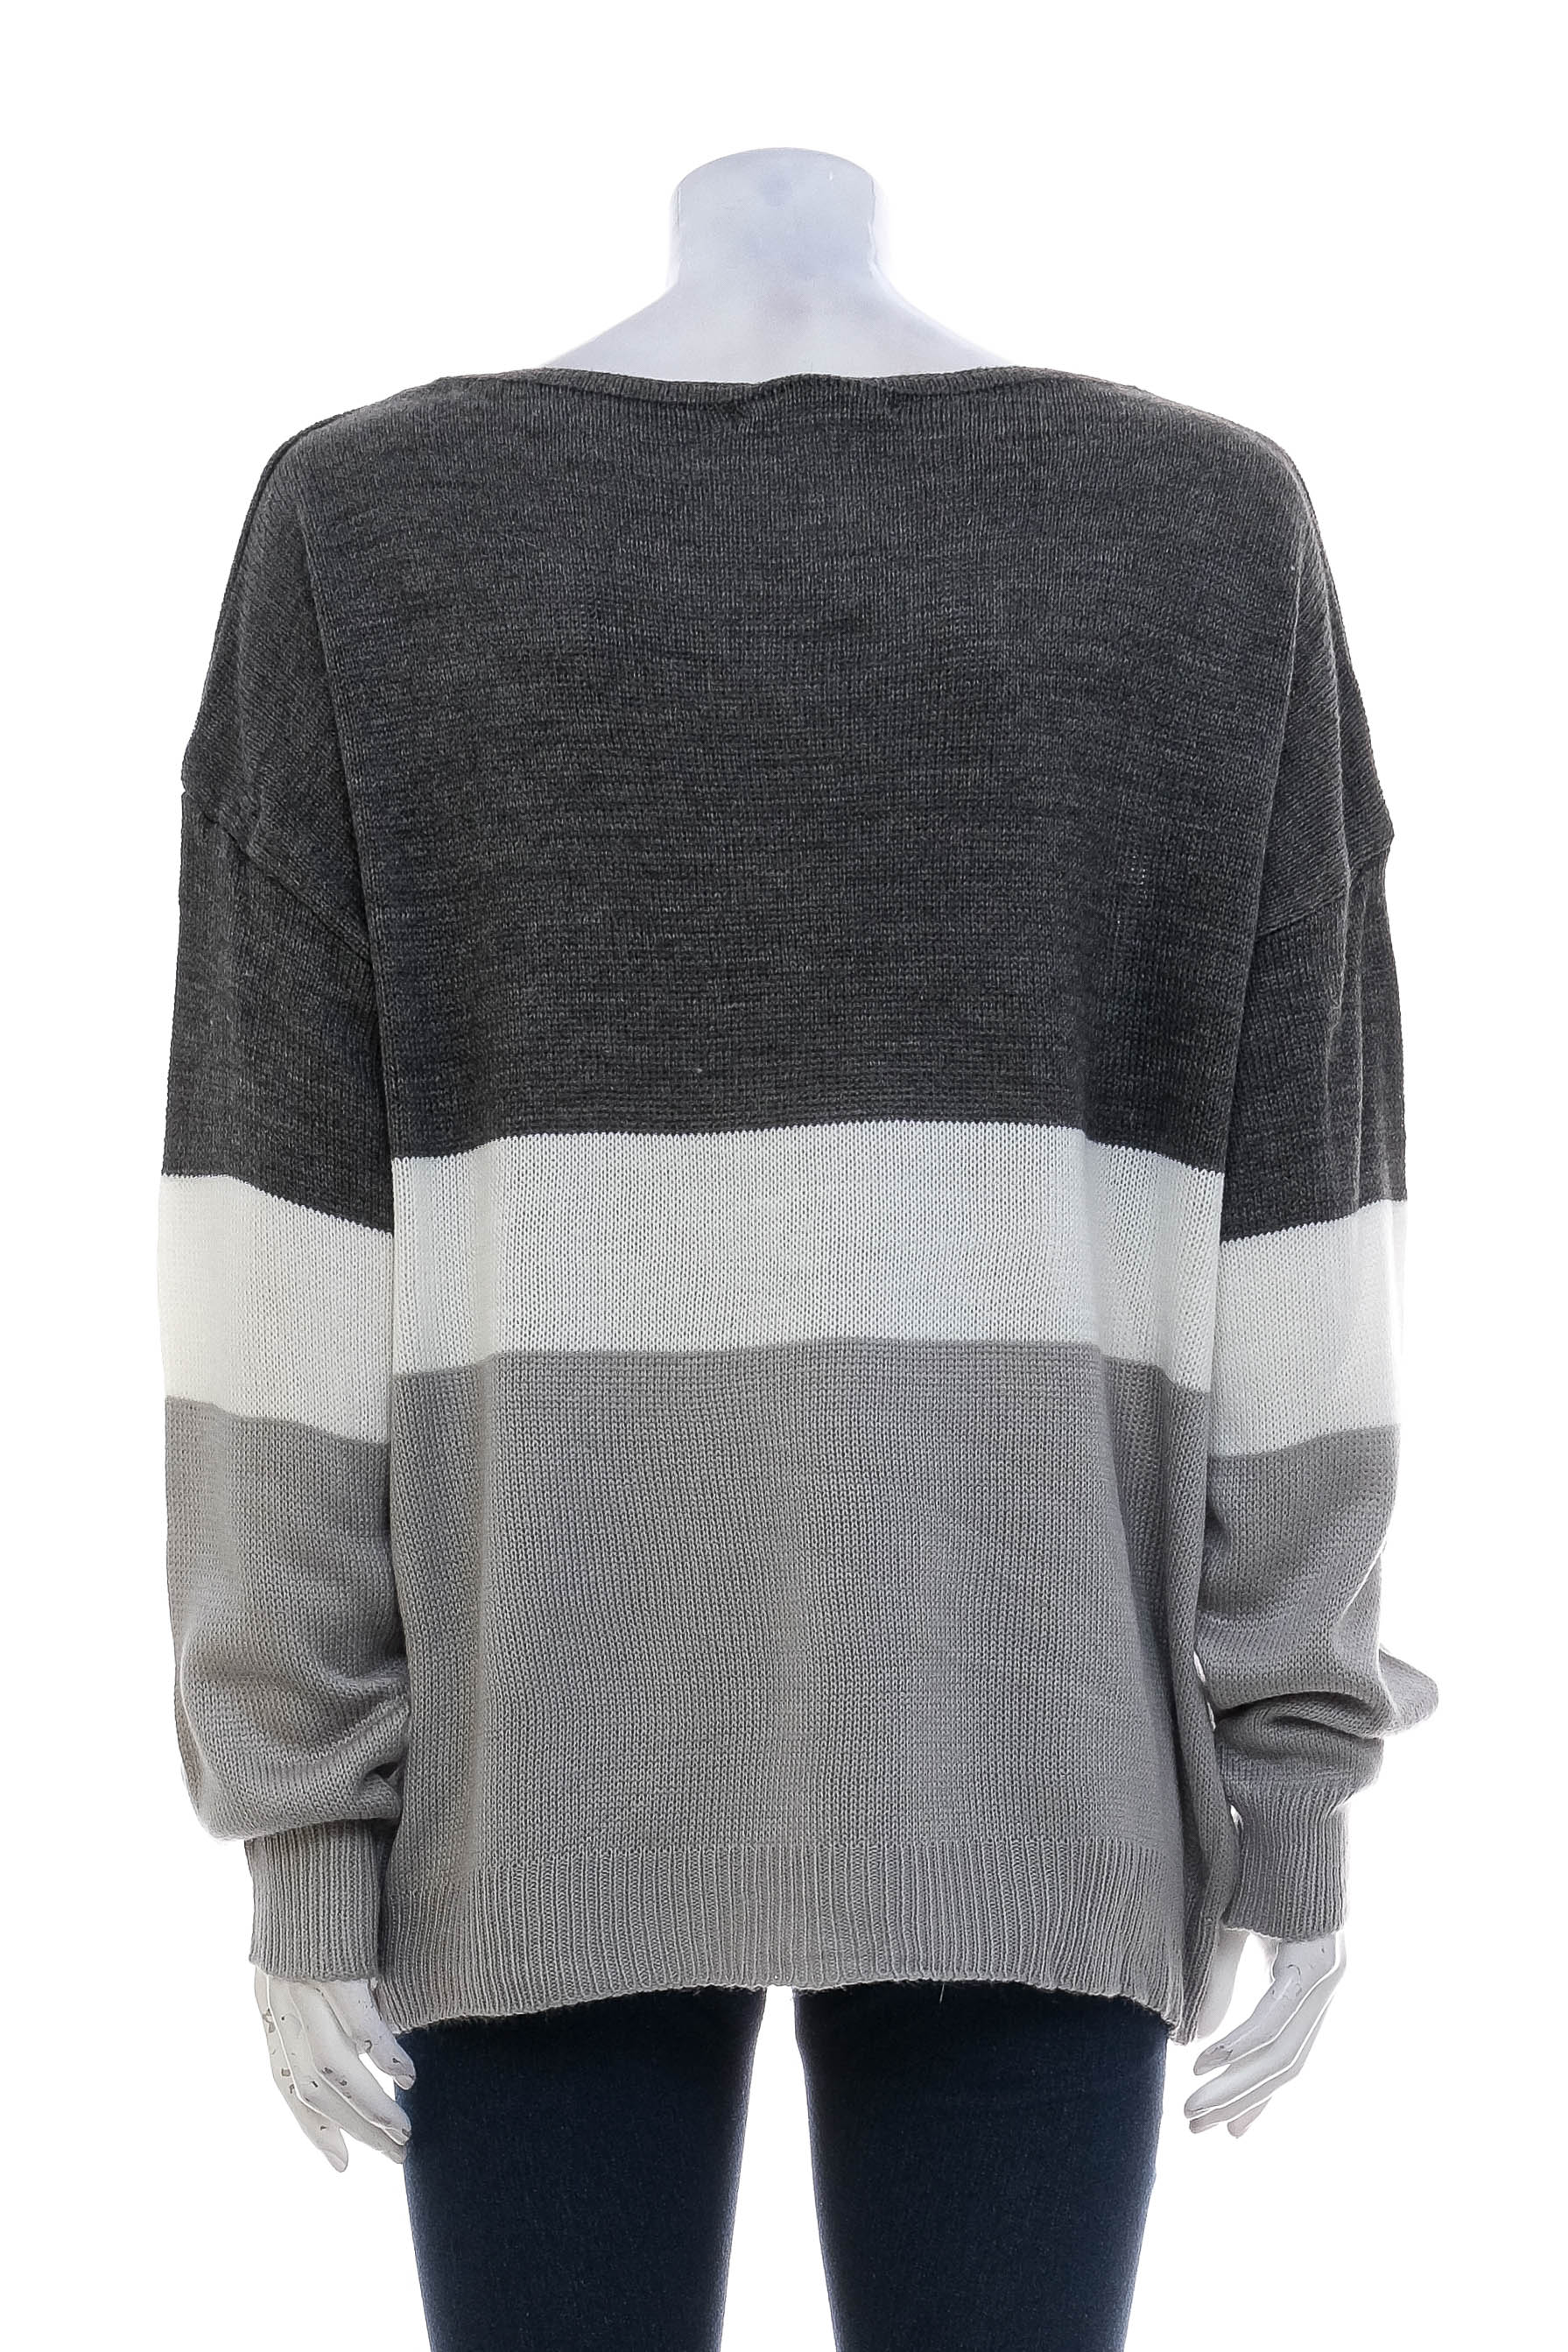 Дамски пуловер - AQE fashion - 1